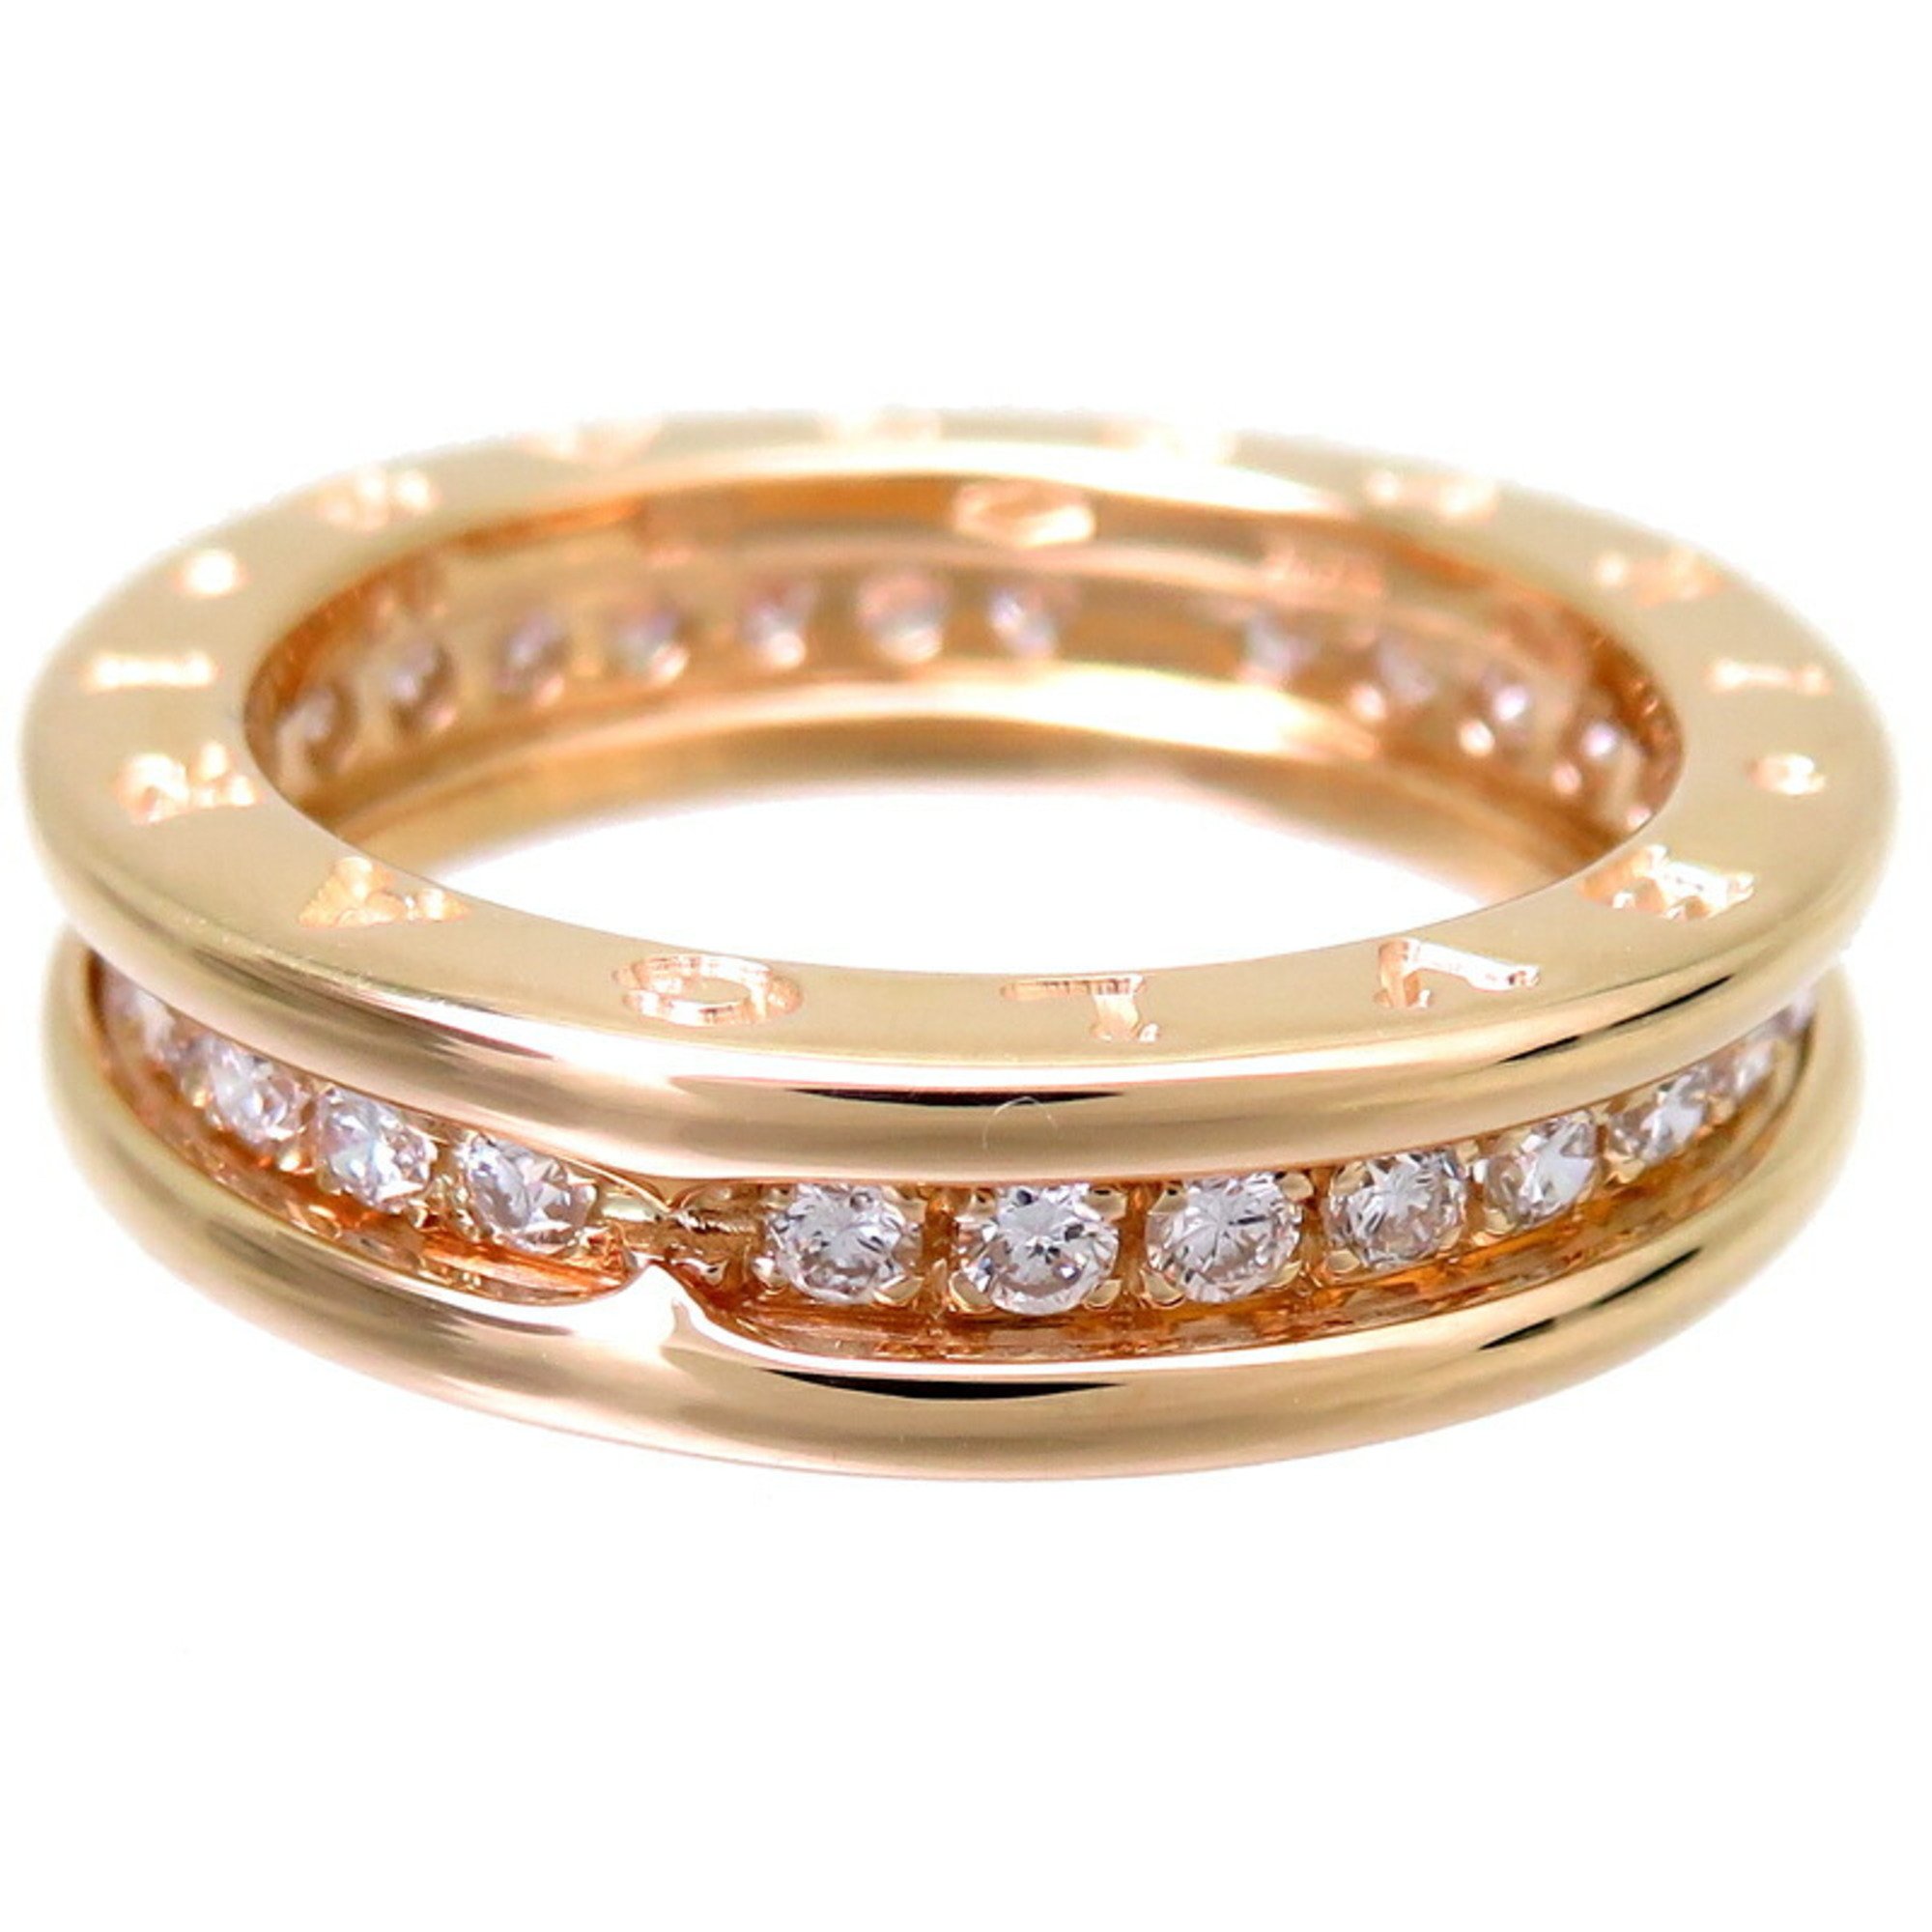 Bvlgari Bulgari #48 750YG B.zero1 1-band diamond ladies ring, 750 yellow gold, size 8